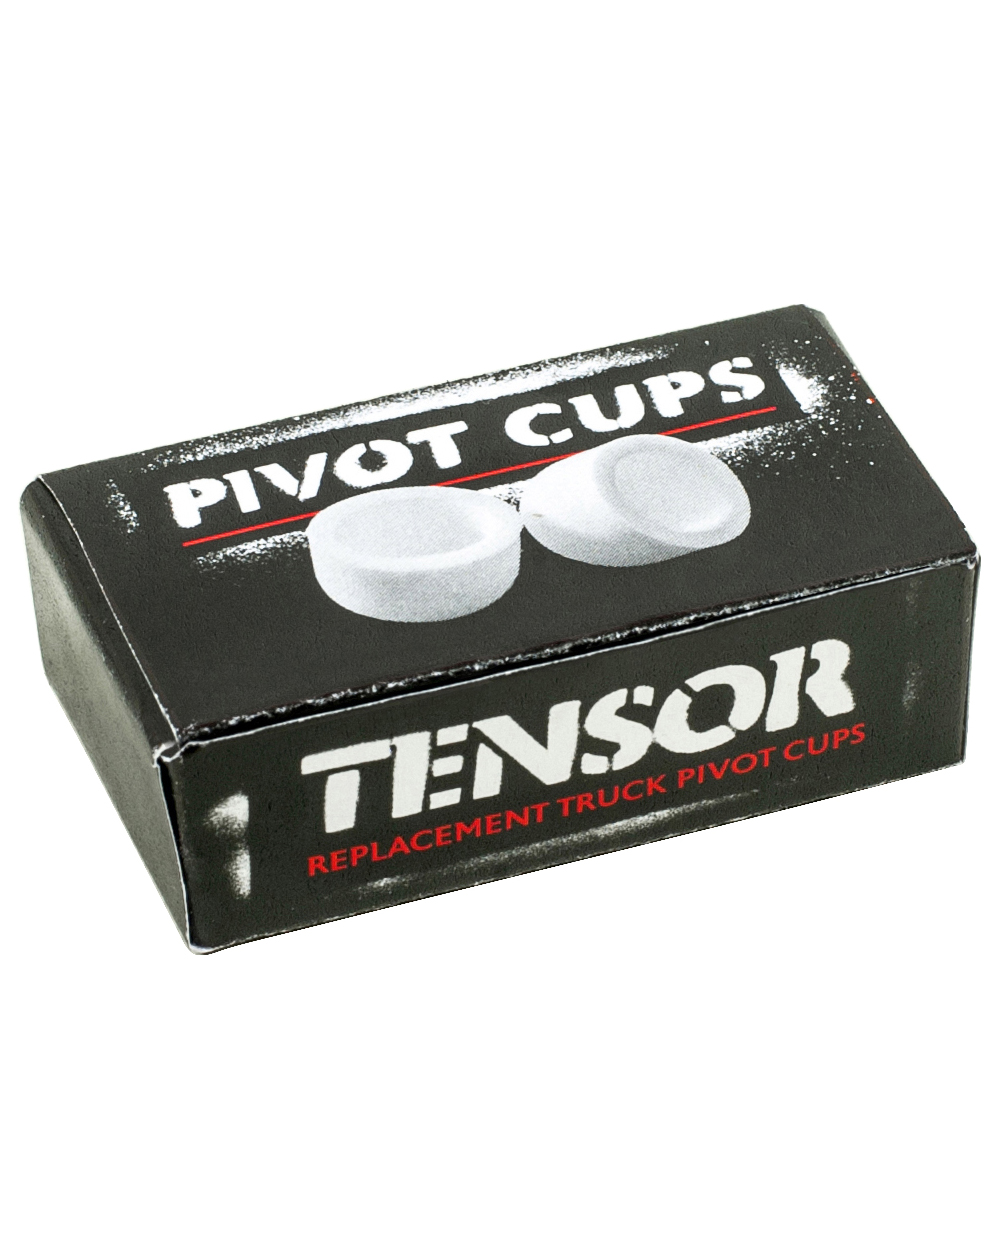 Tensor ATG Truck Pivot Cups pack of 2